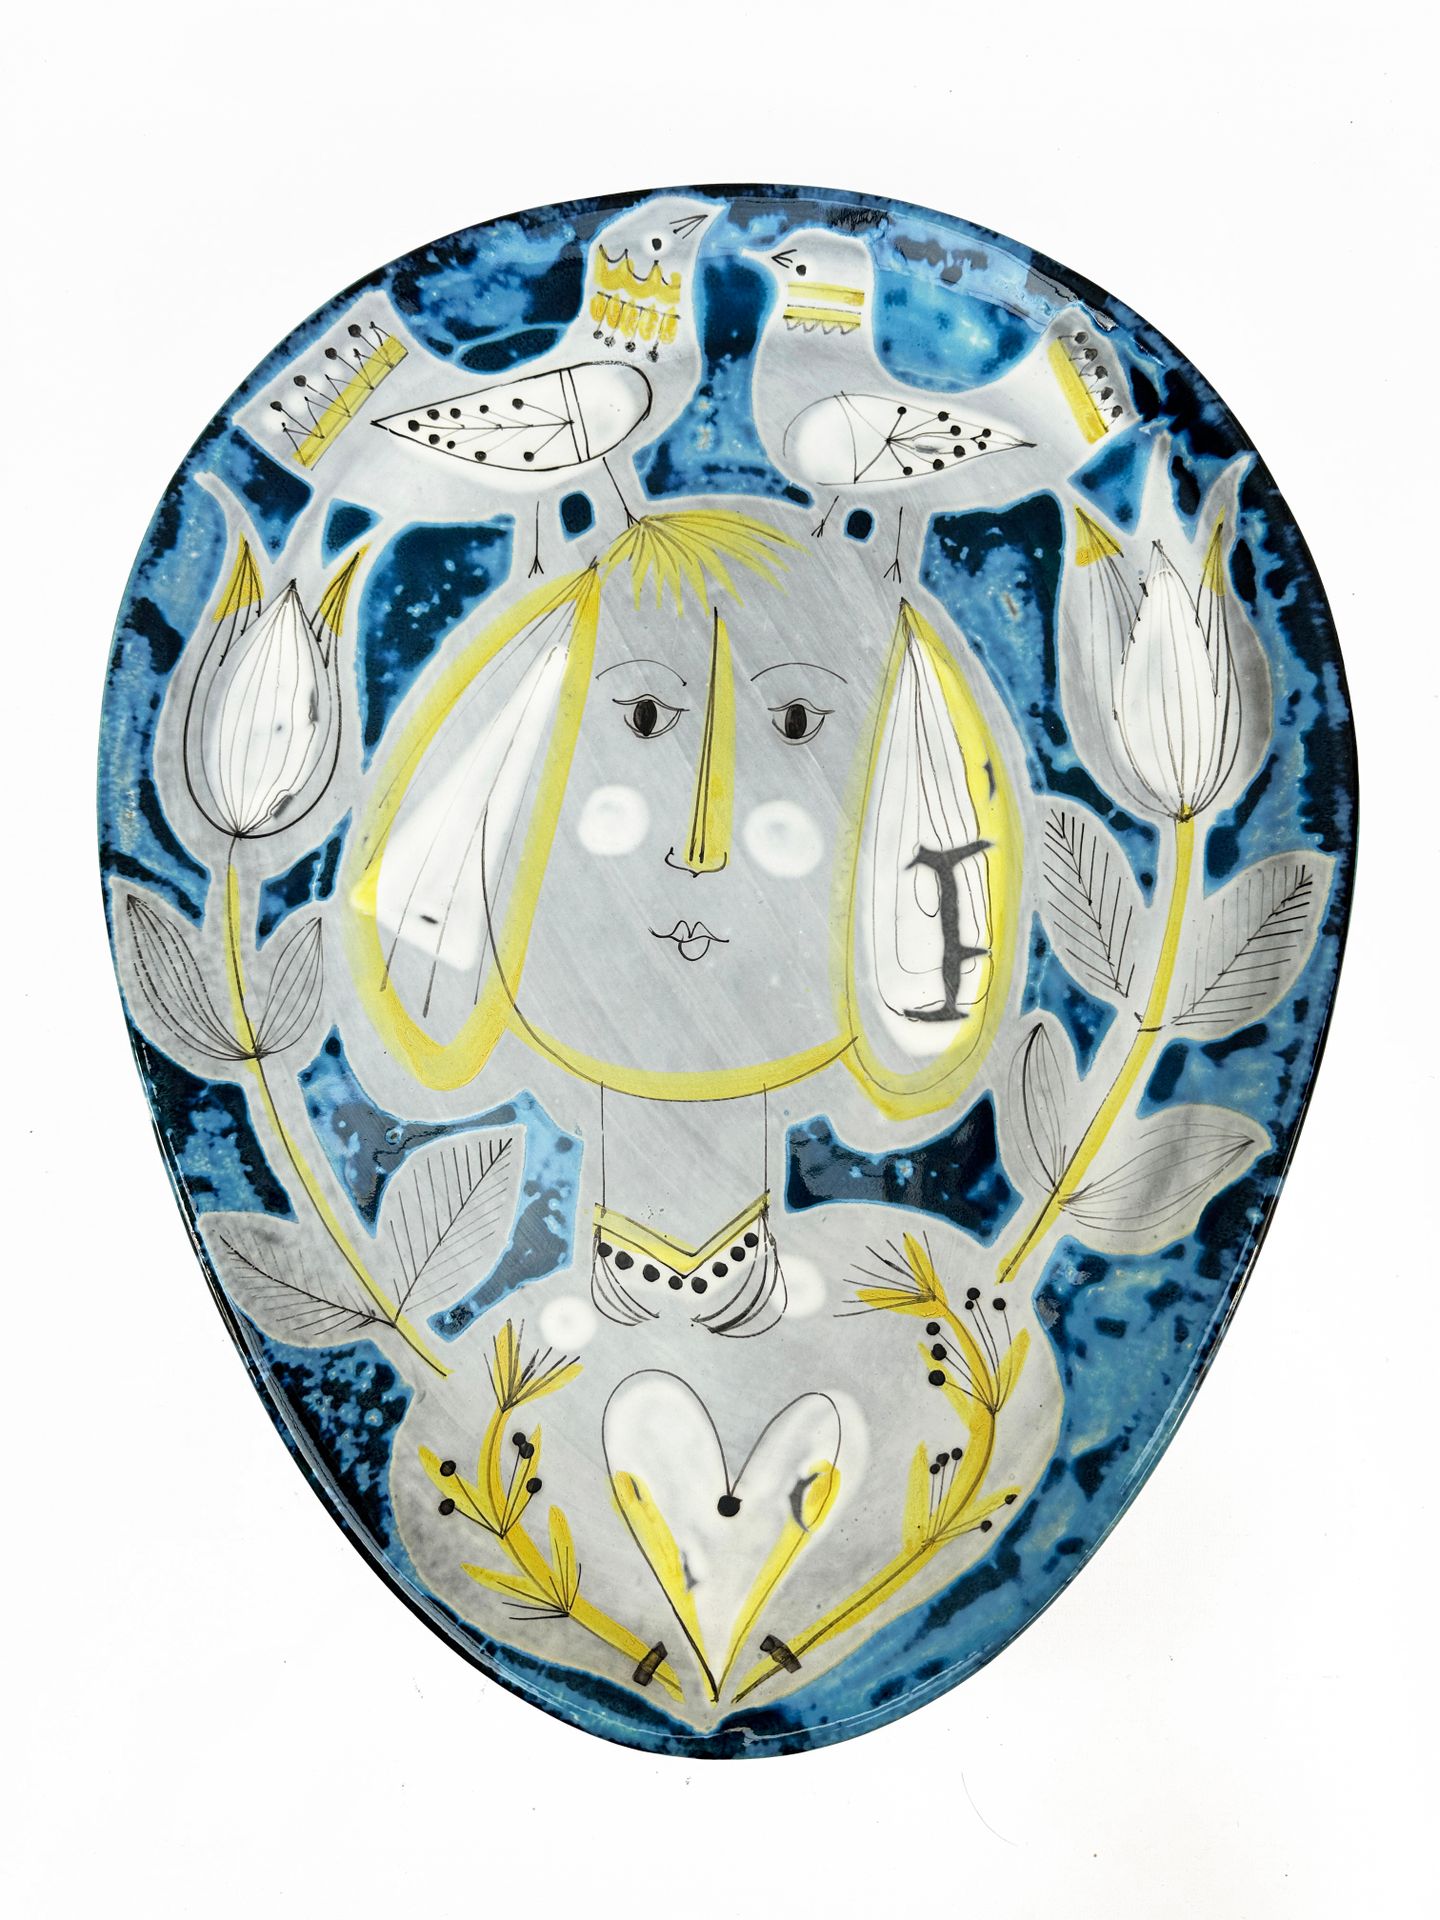 Null 罗杰-卡普隆（1922-2006）
大盘，约 1950 年，名为 "femme aux oiseaux"，卵圆形，蓝、黄、灰色釉面陶瓷。
背面有卡普隆&hellip;